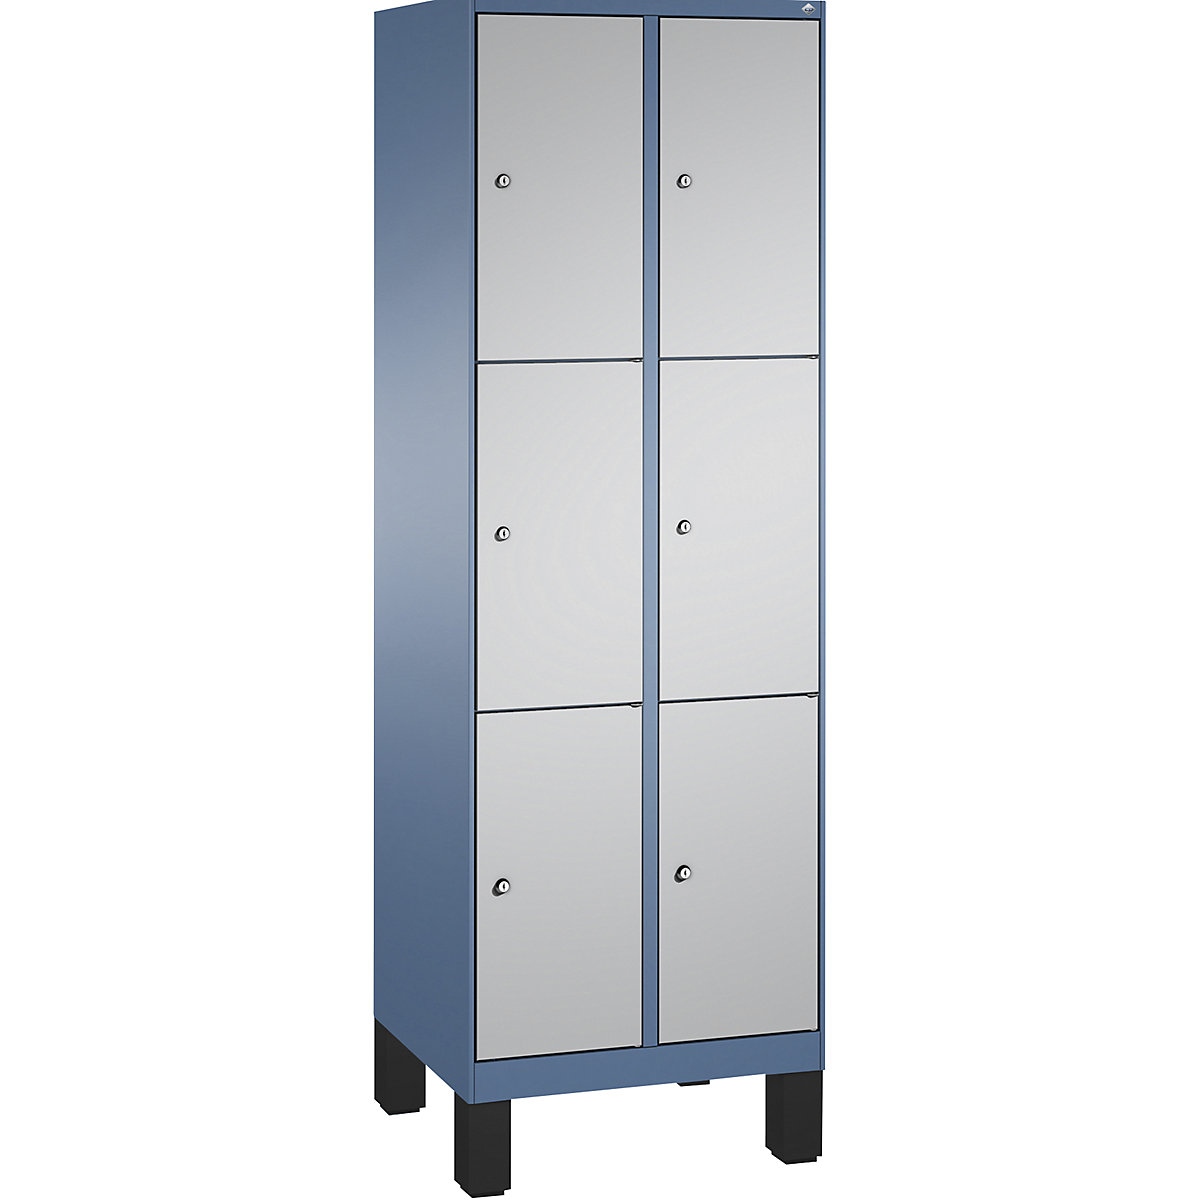 Armário de cacifos EVOLO, com pés – C+P, 2 compartimentos, 3 cacifos cada, largura do compartimento 300 mm, azul distante / cinza alumínio-8